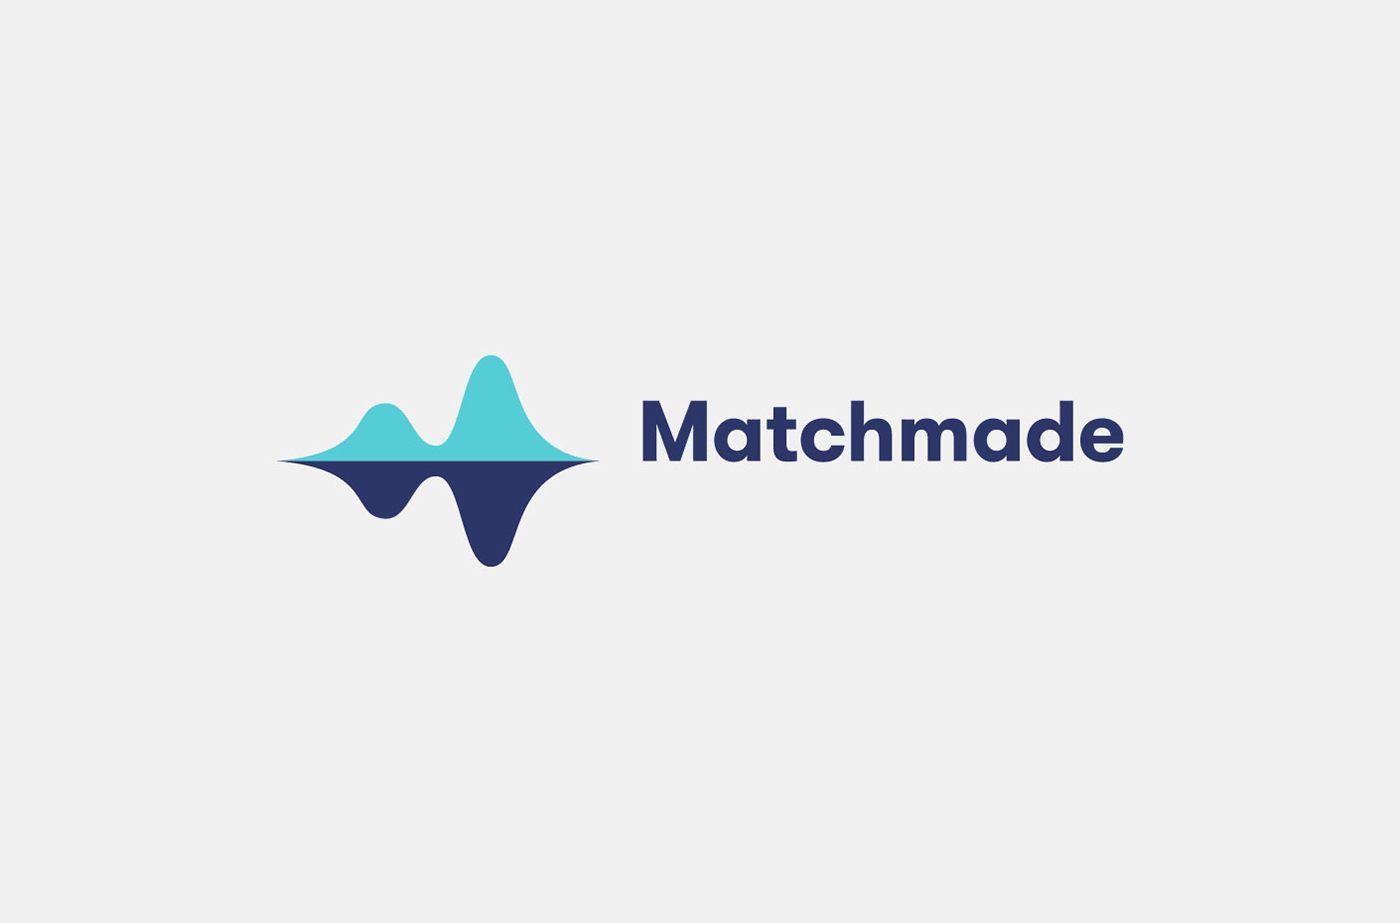 matchmade logo by upstruct and muskat